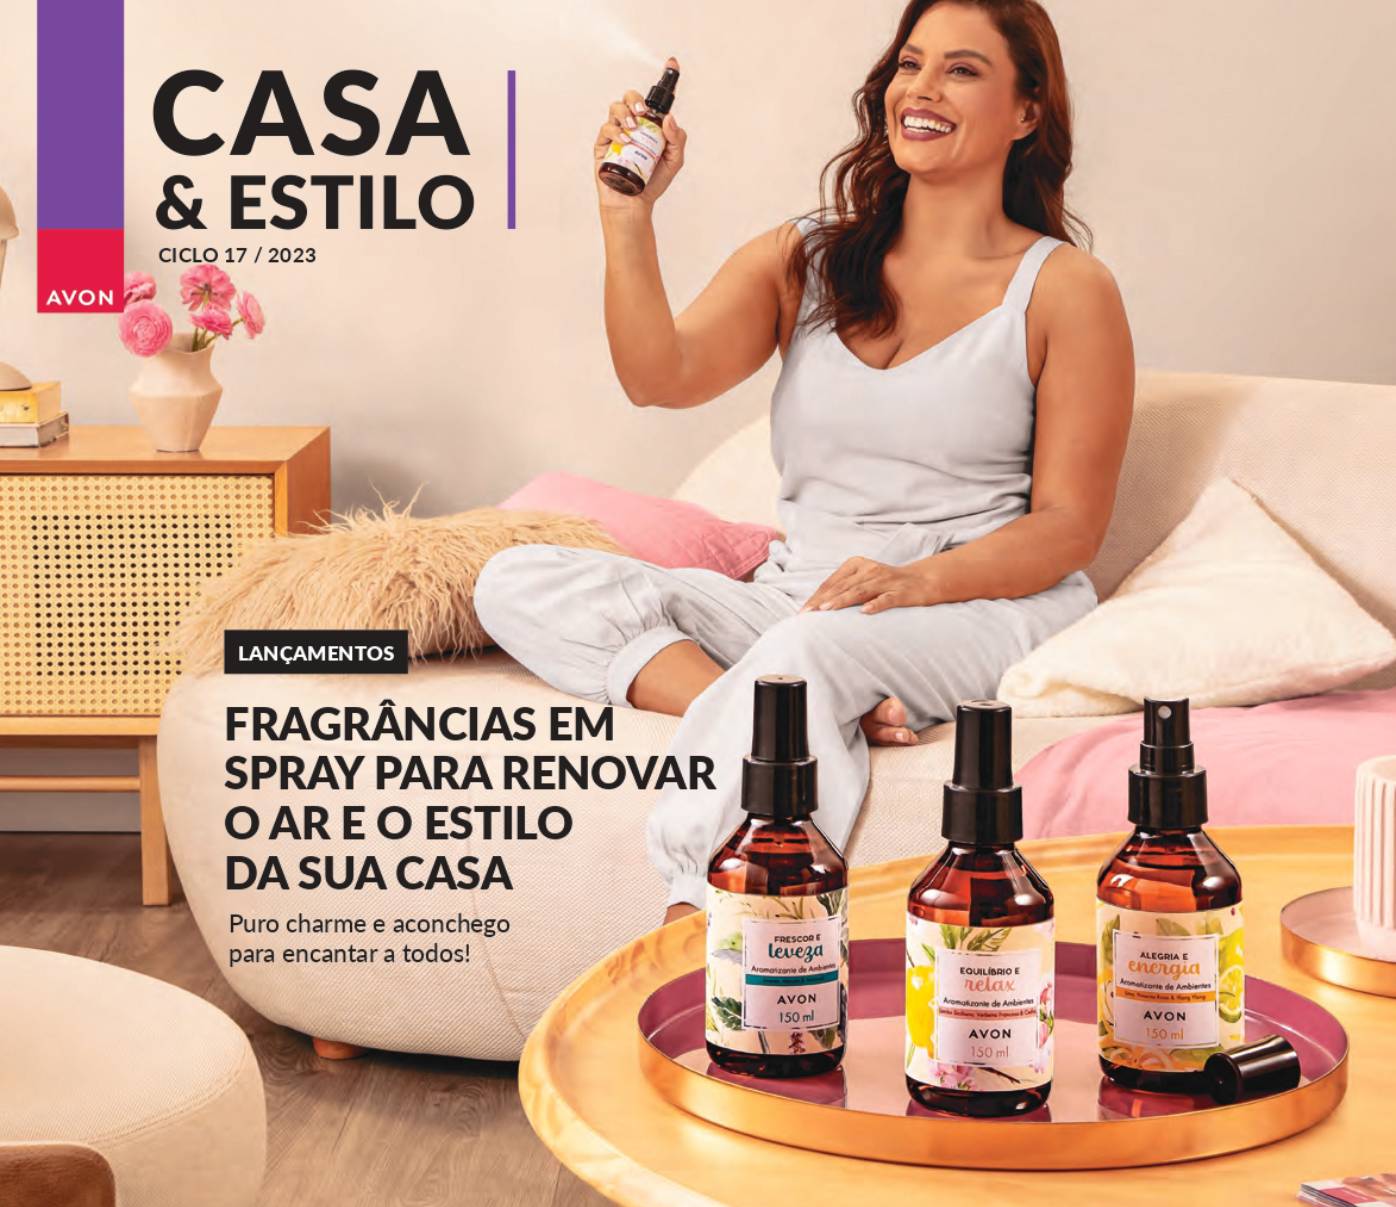 AVON CASA & ESTILO CAMPANHA 17 2023 BRASIL